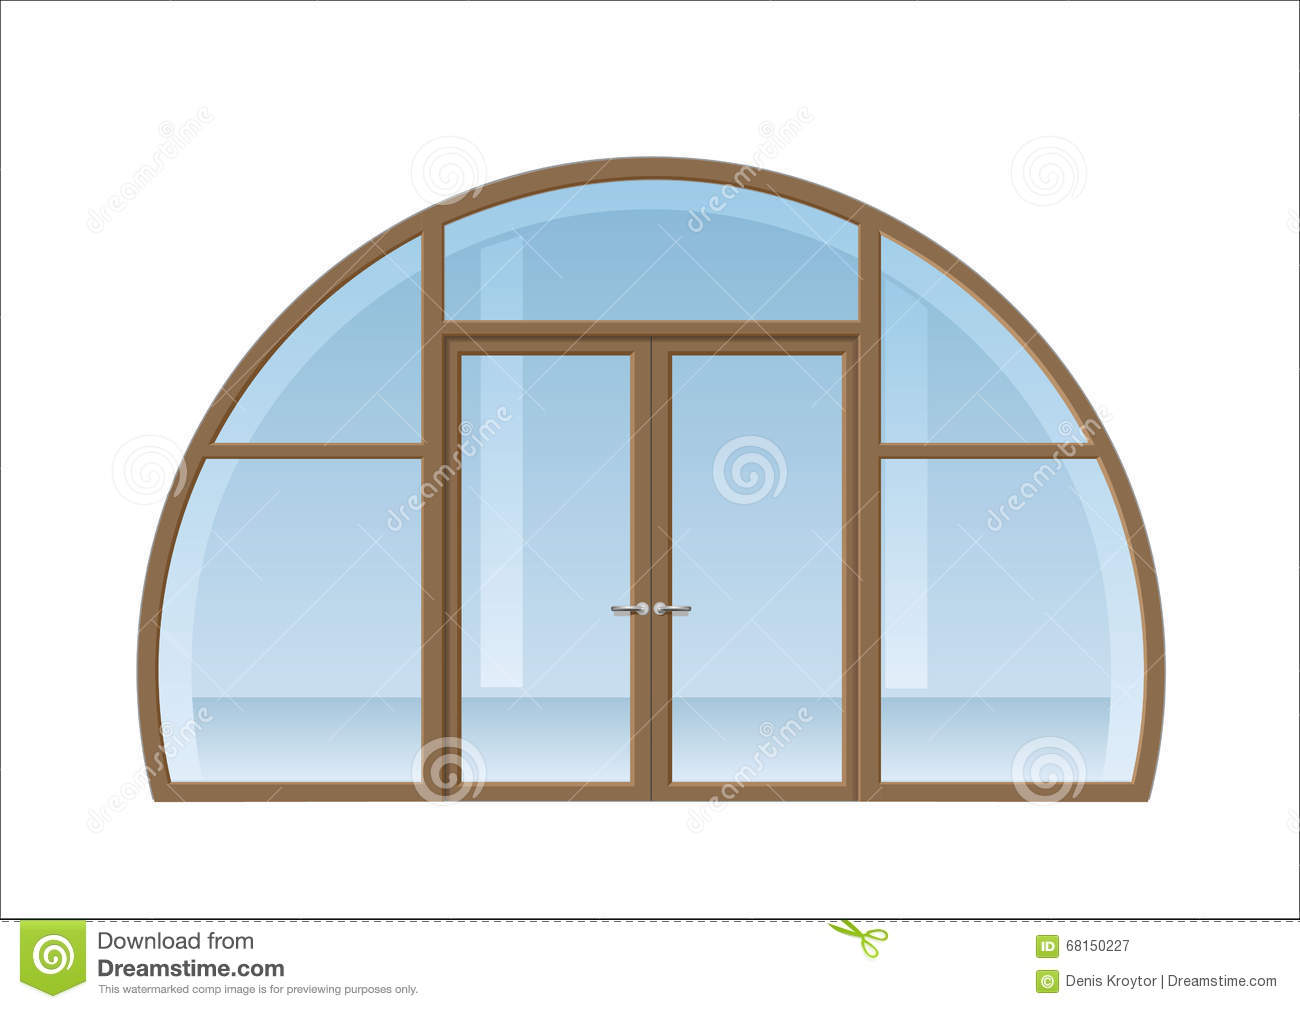 clipart windows and doors - photo #30